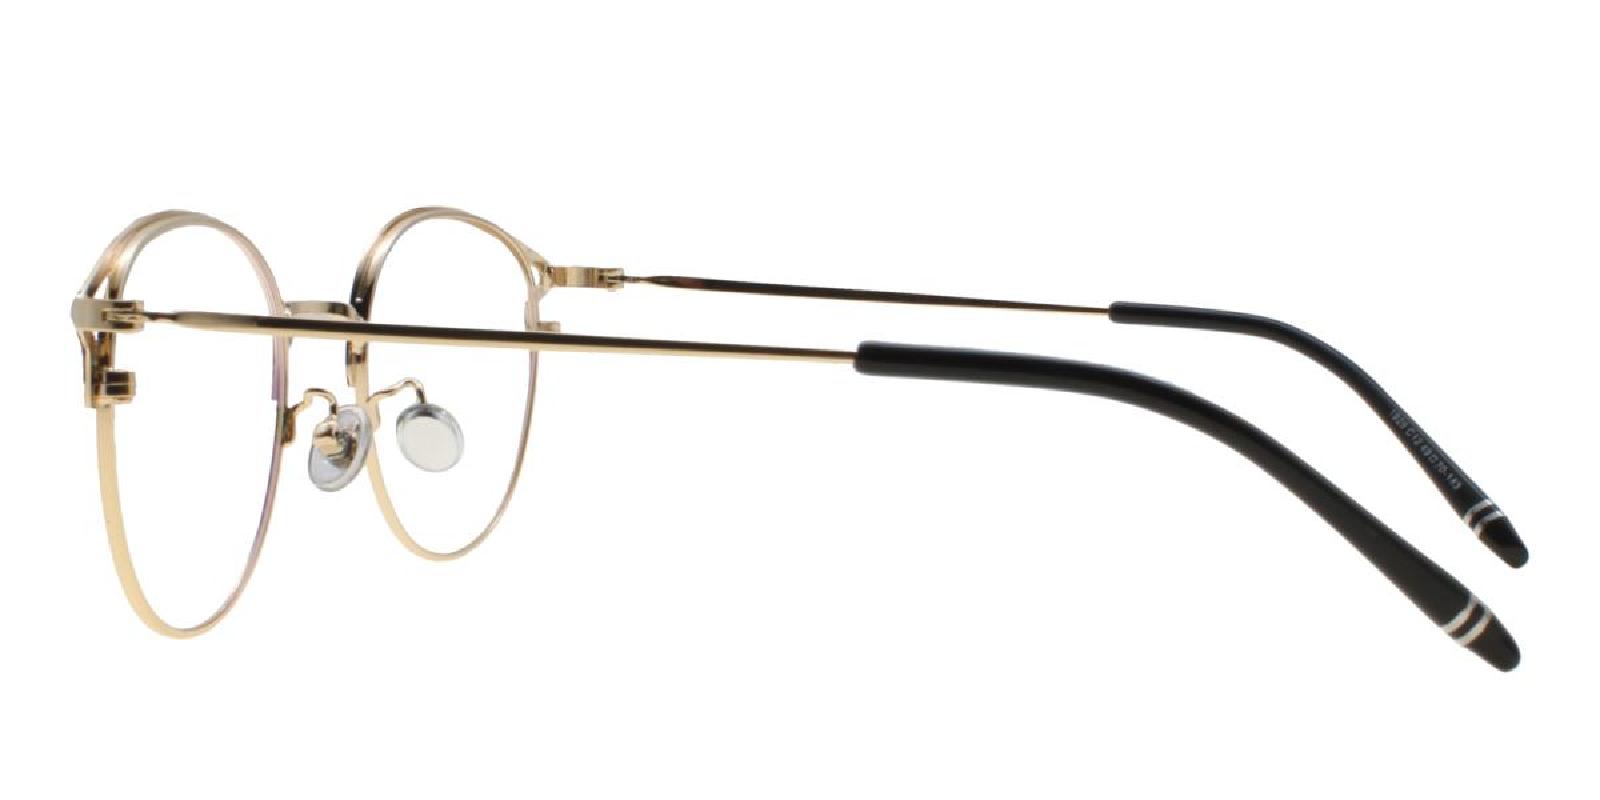 Brace-Gold-Browline-Metal-Eyeglasses-detail